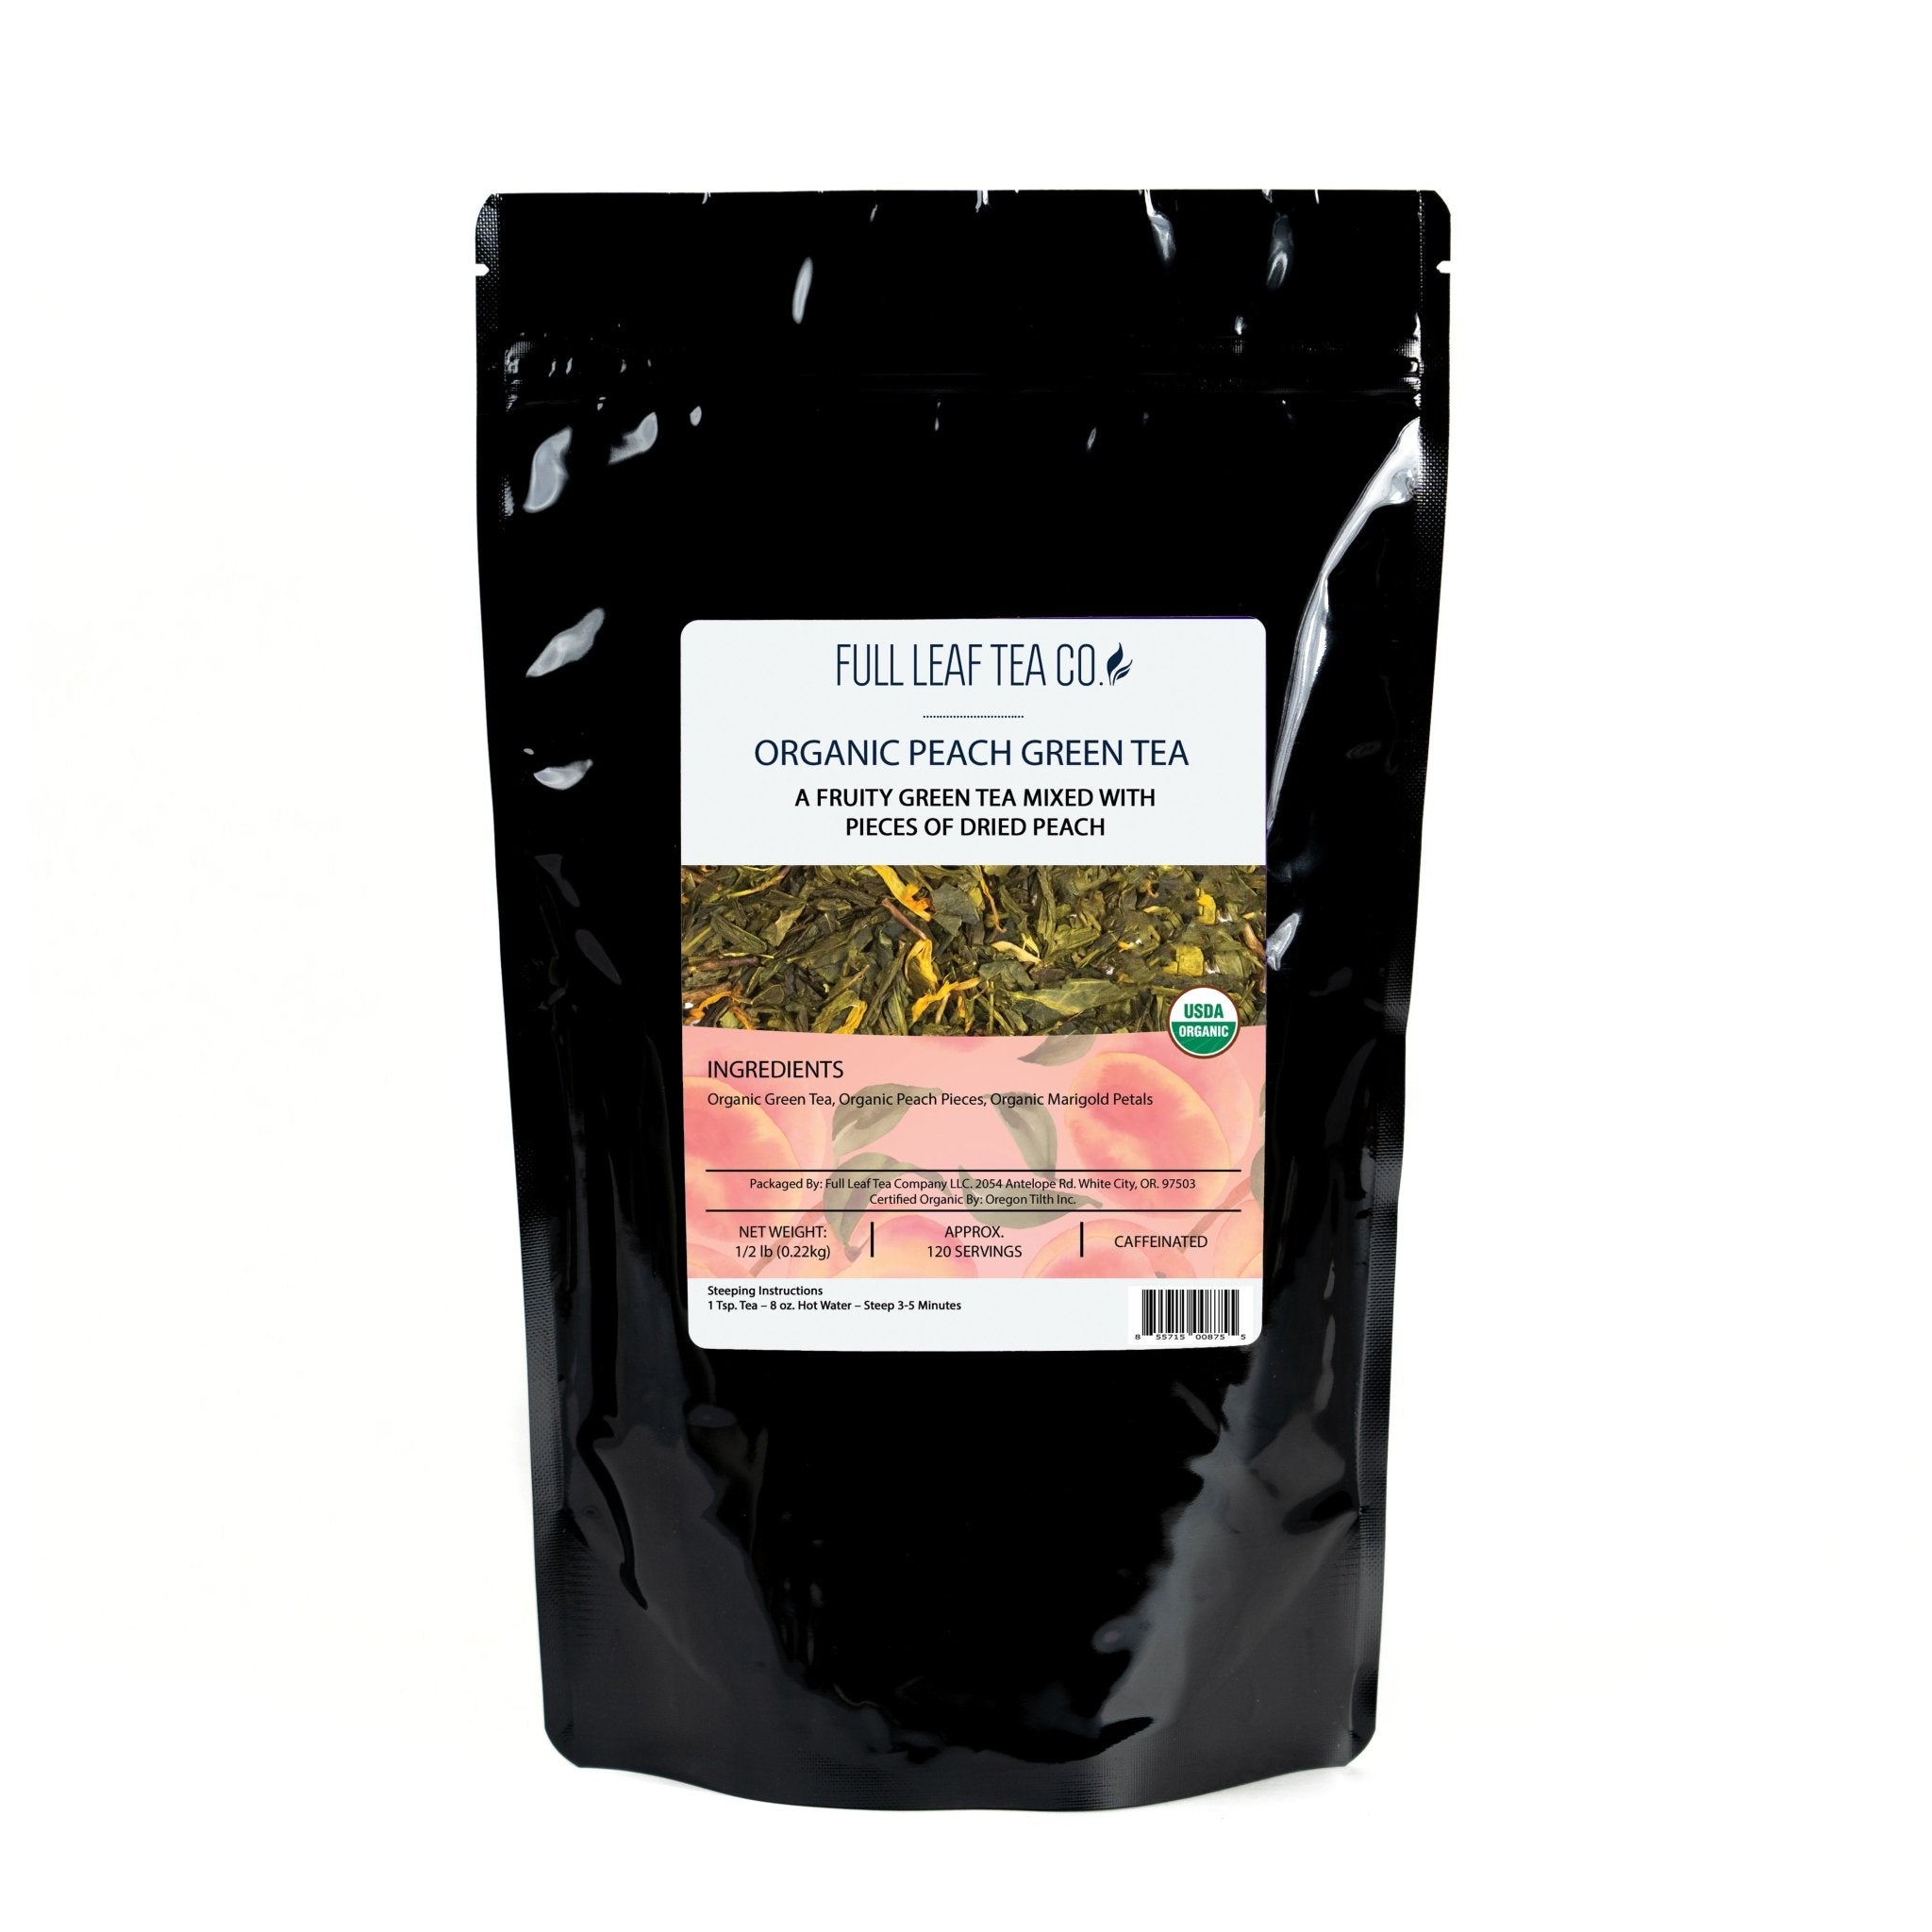 Organic Peach Green Tea - Loose Leaf Tea - Full Leaf Tea Company